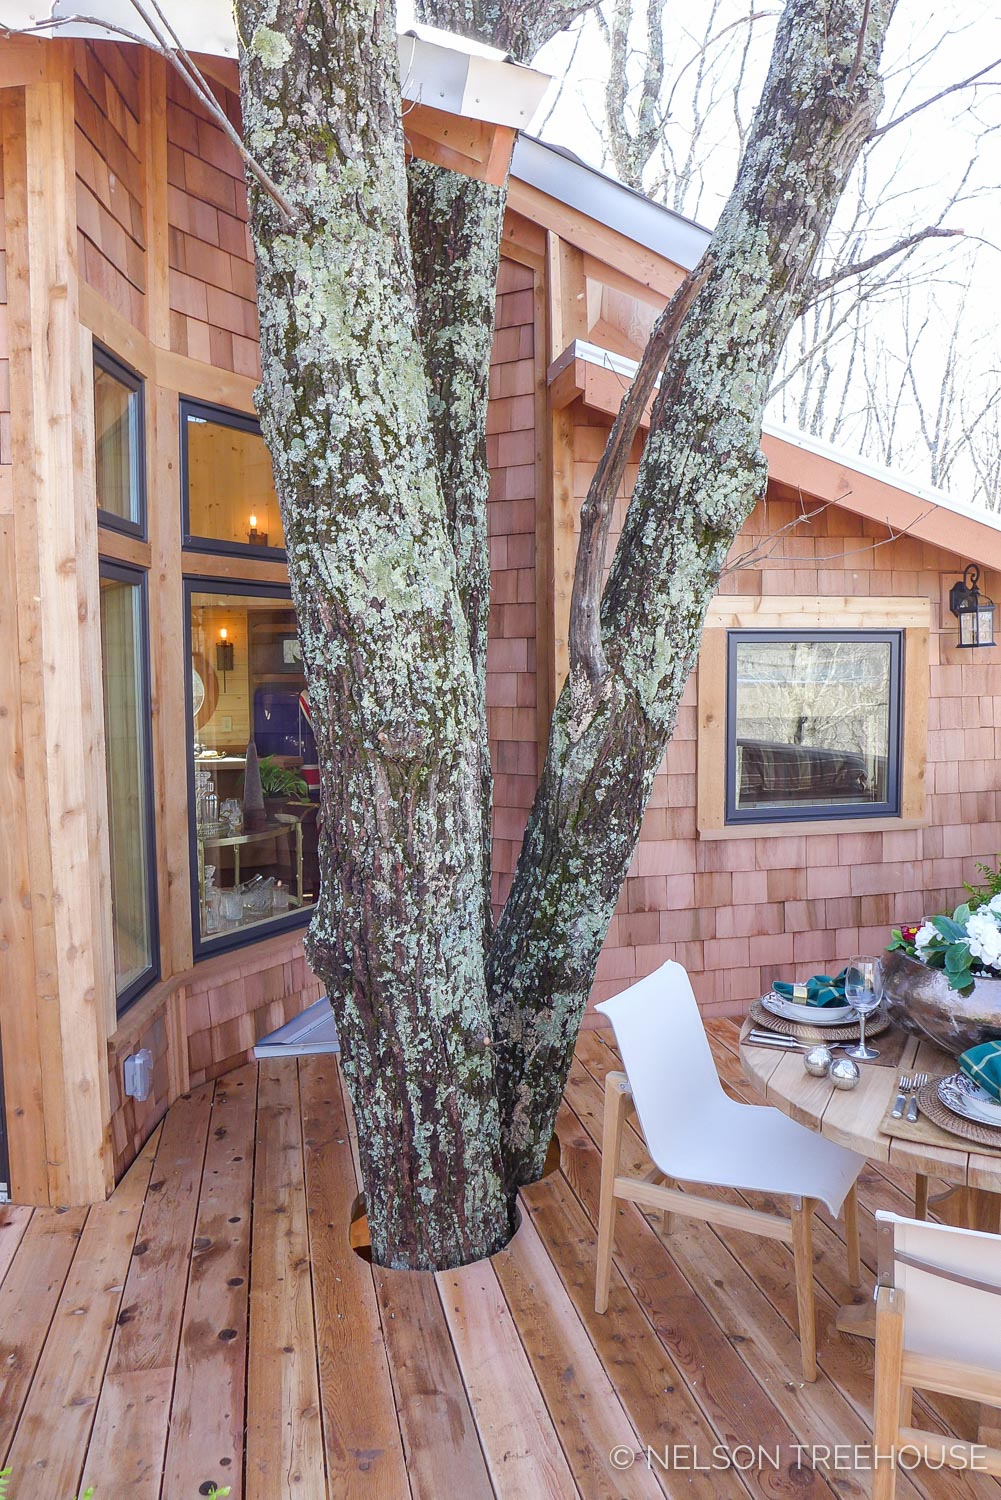  Super Spy Treehouse - Nelson Treehouse 2018 - Trees through deck 